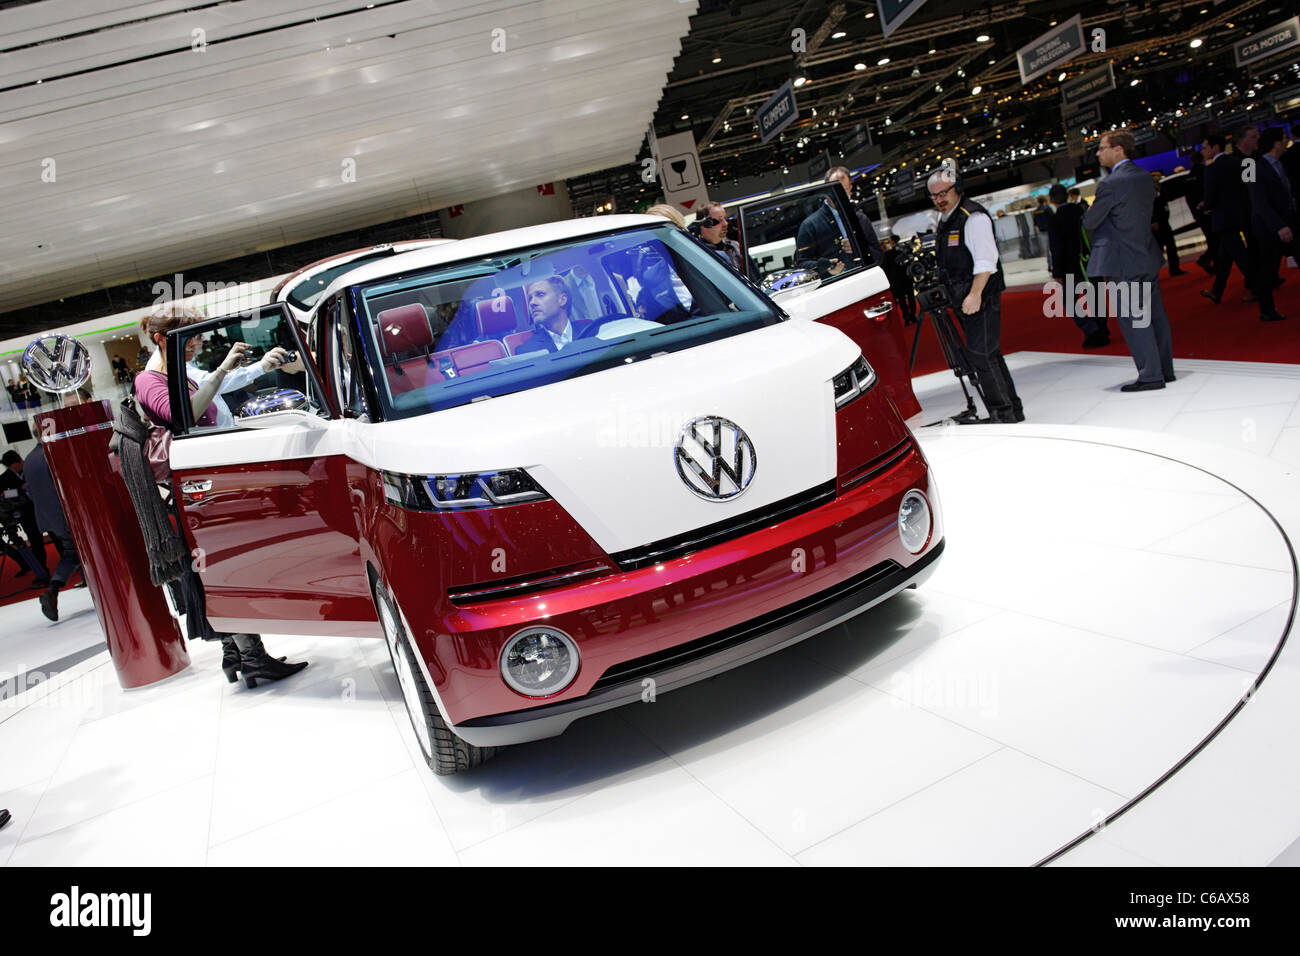 Volkswagen, VW logo, corporate identity, lettering, optional, white  background, Germany Stock Photo - Alamy